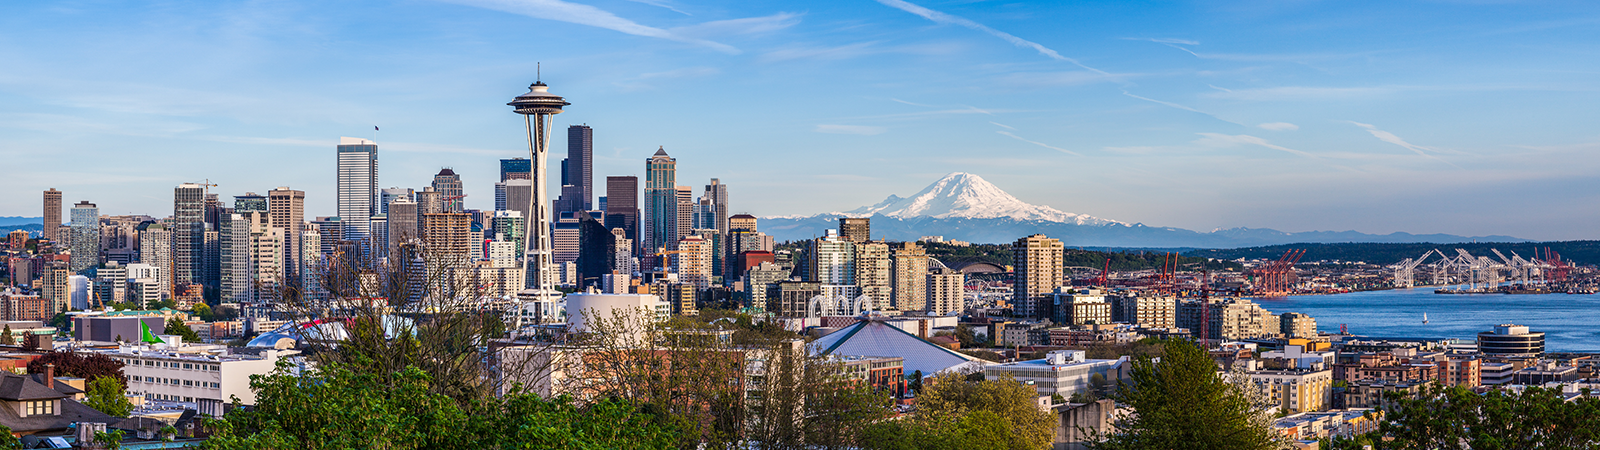 Seattle skyline image banner image